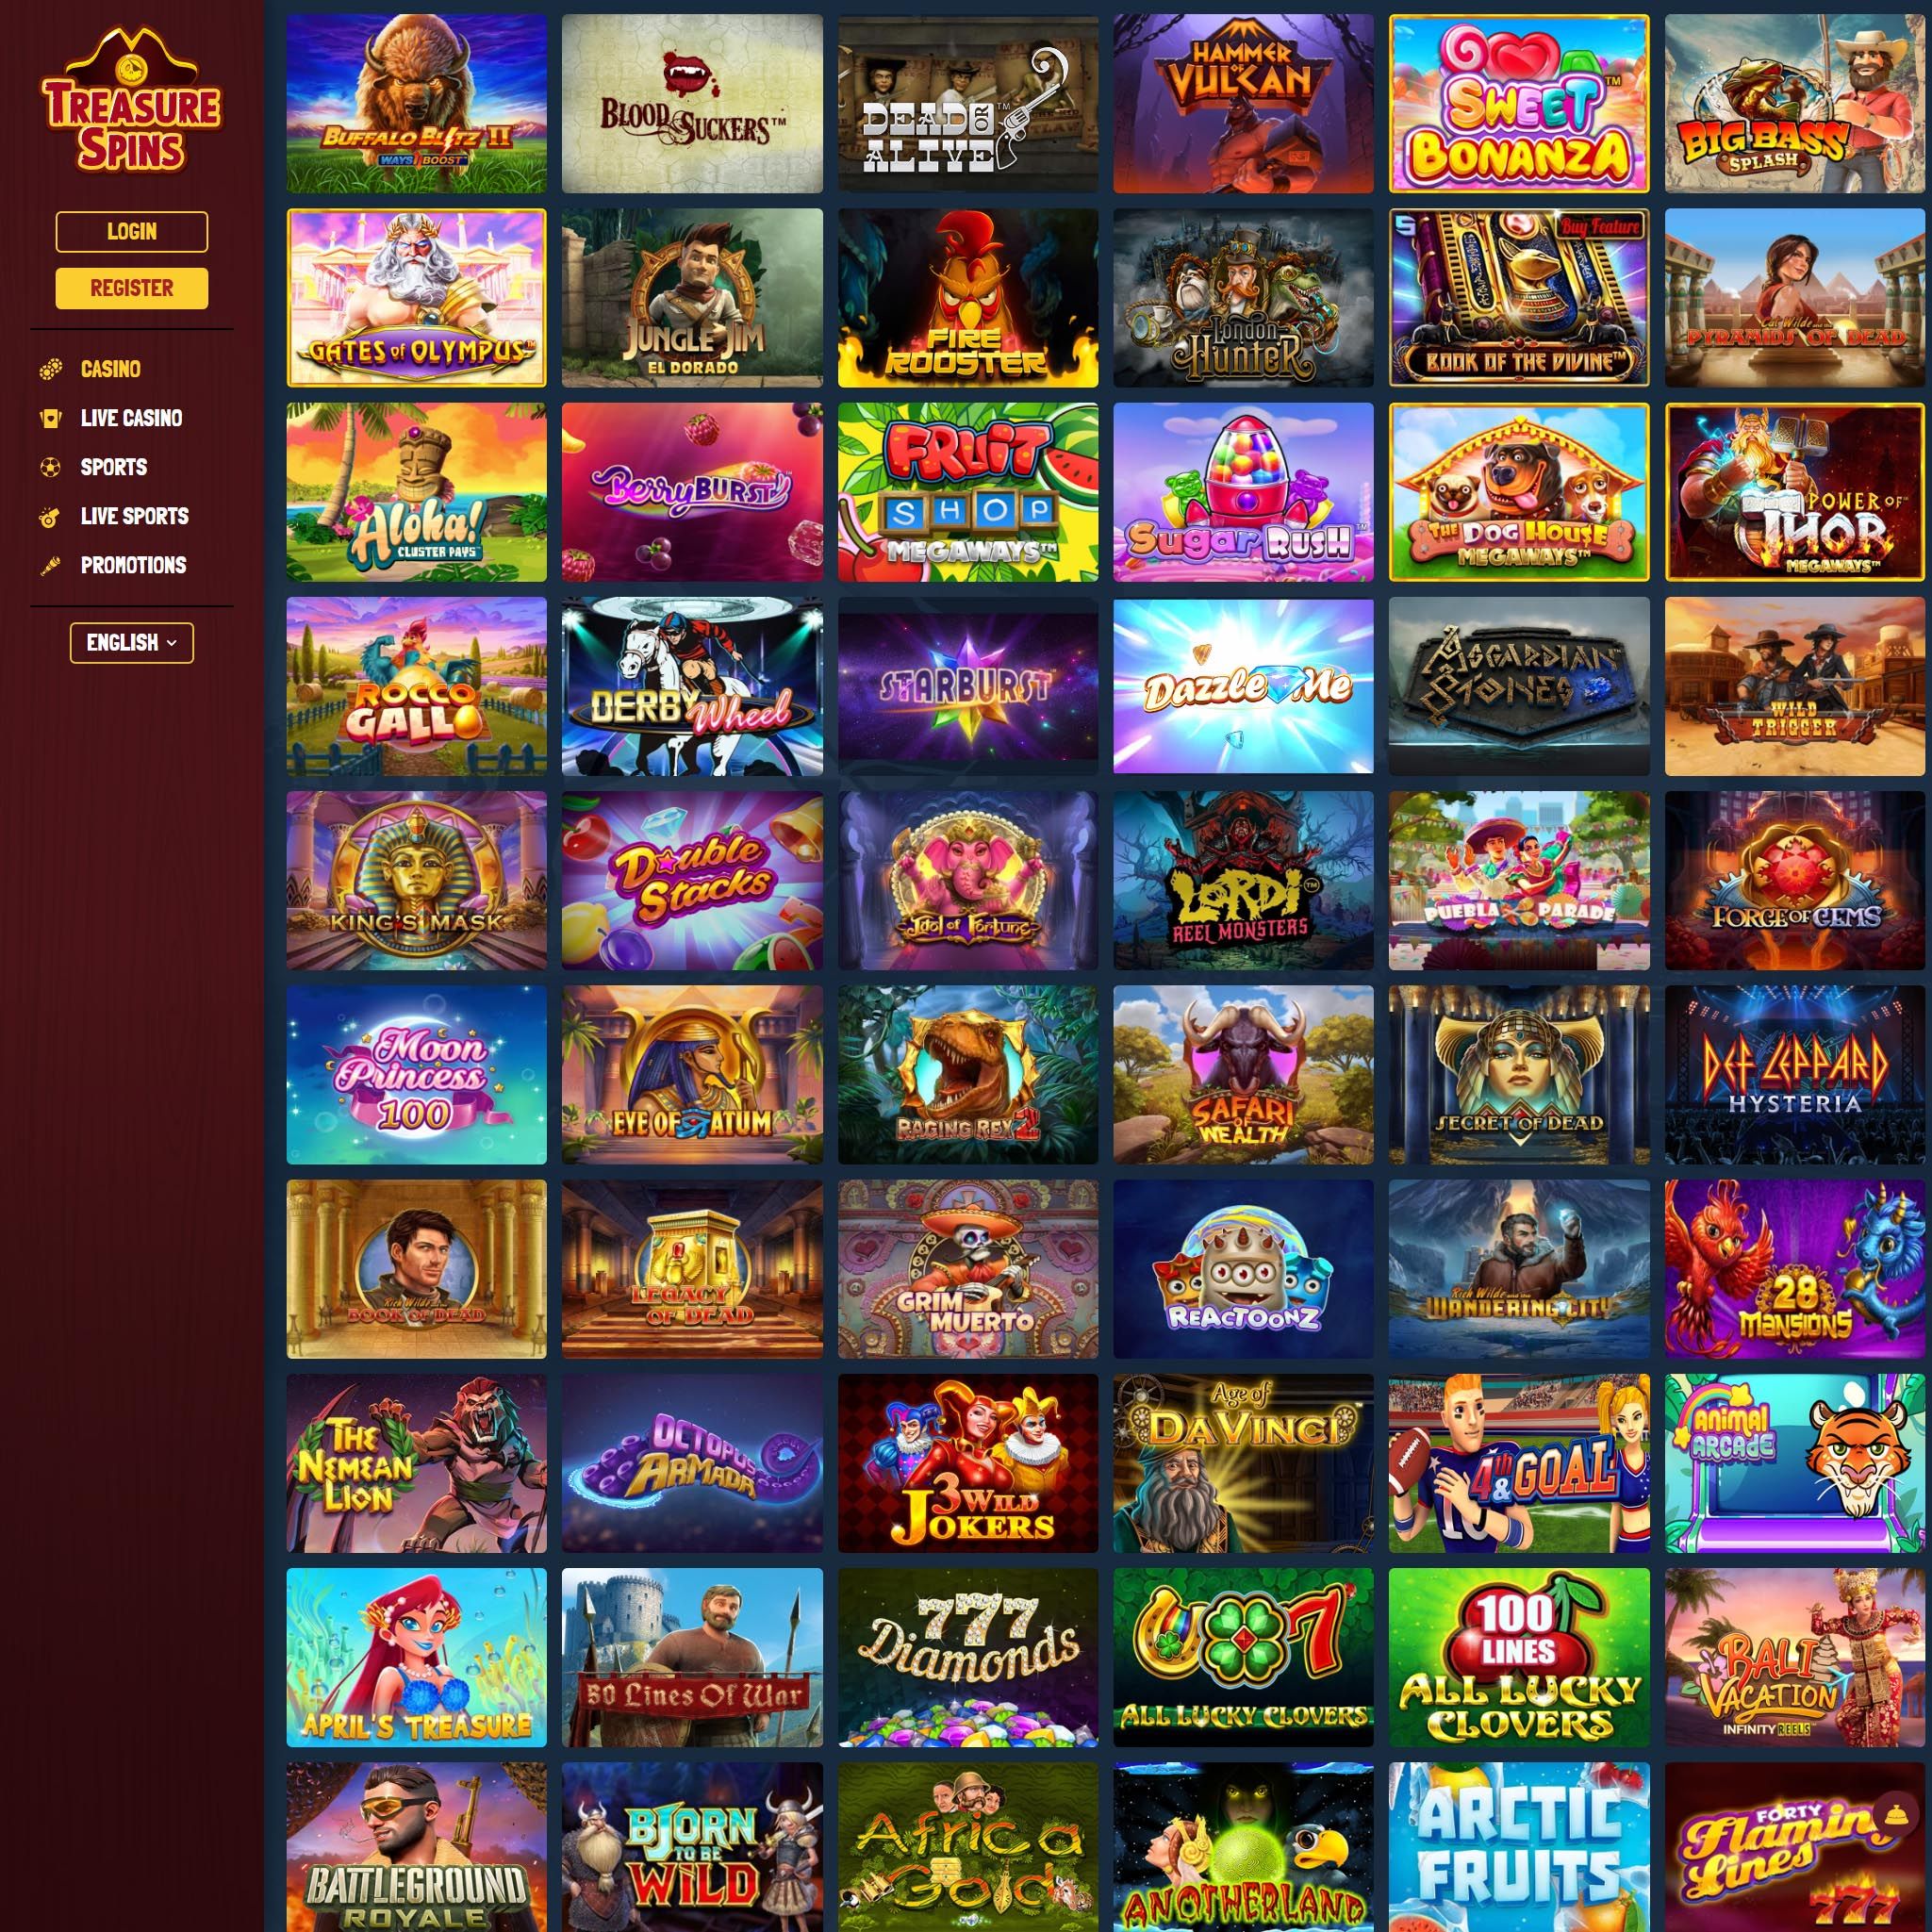 TreasureSpins Casino full games catalogue